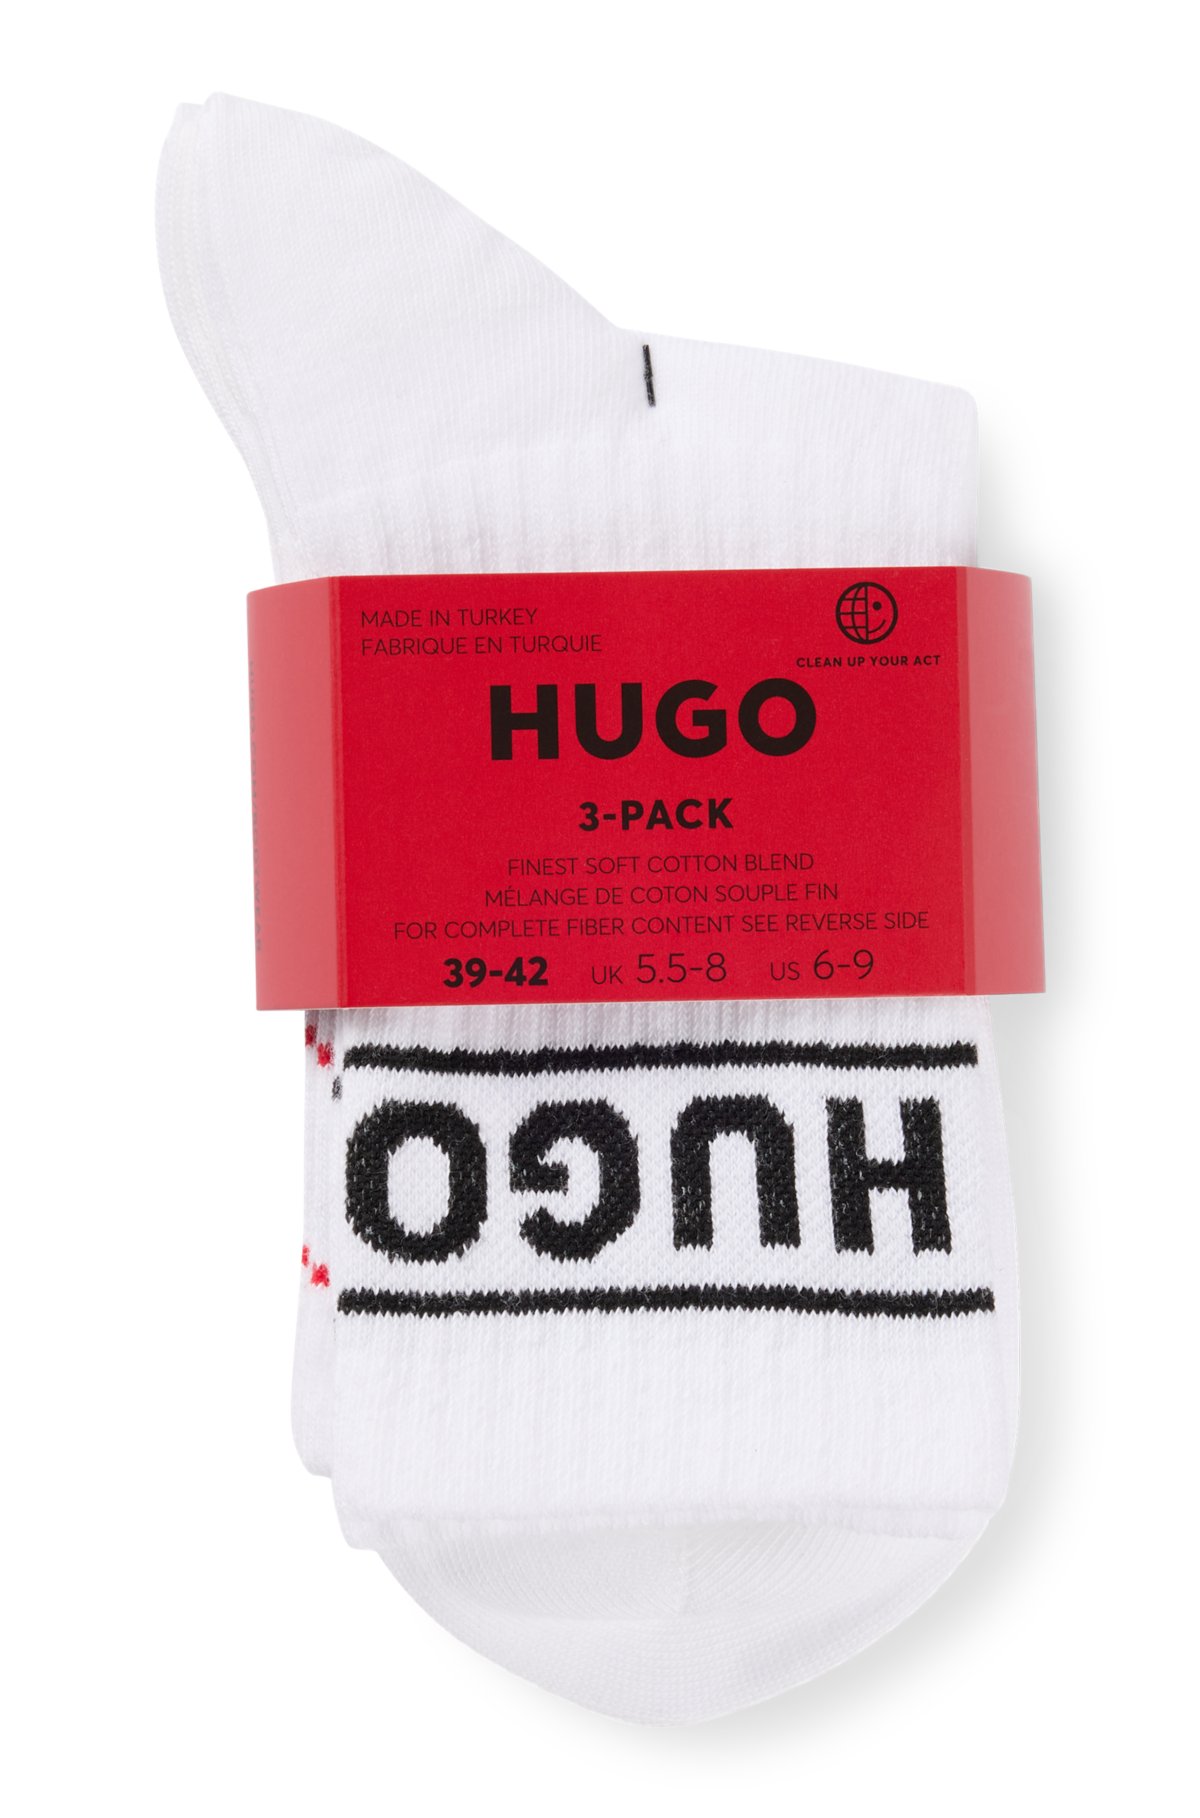 Three-pack of short-length socks with logo, White